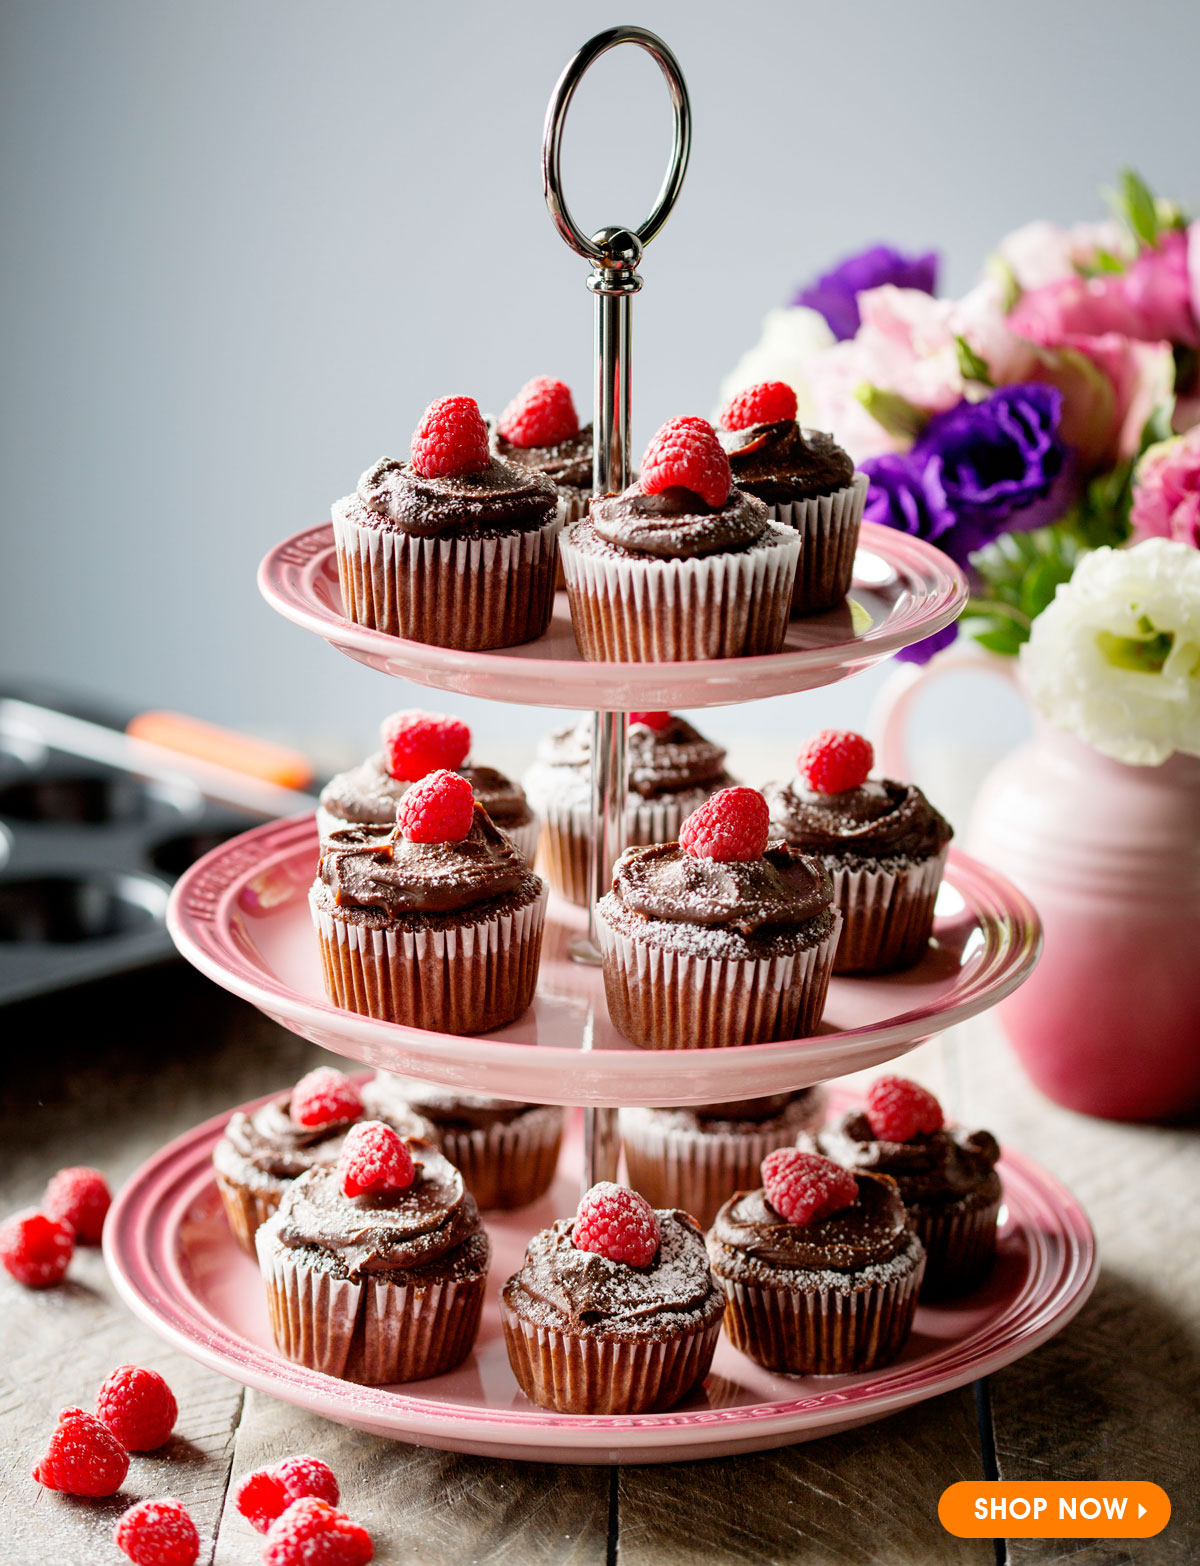  Chocolate Cupcakes with Dark Chocolate Ganache 